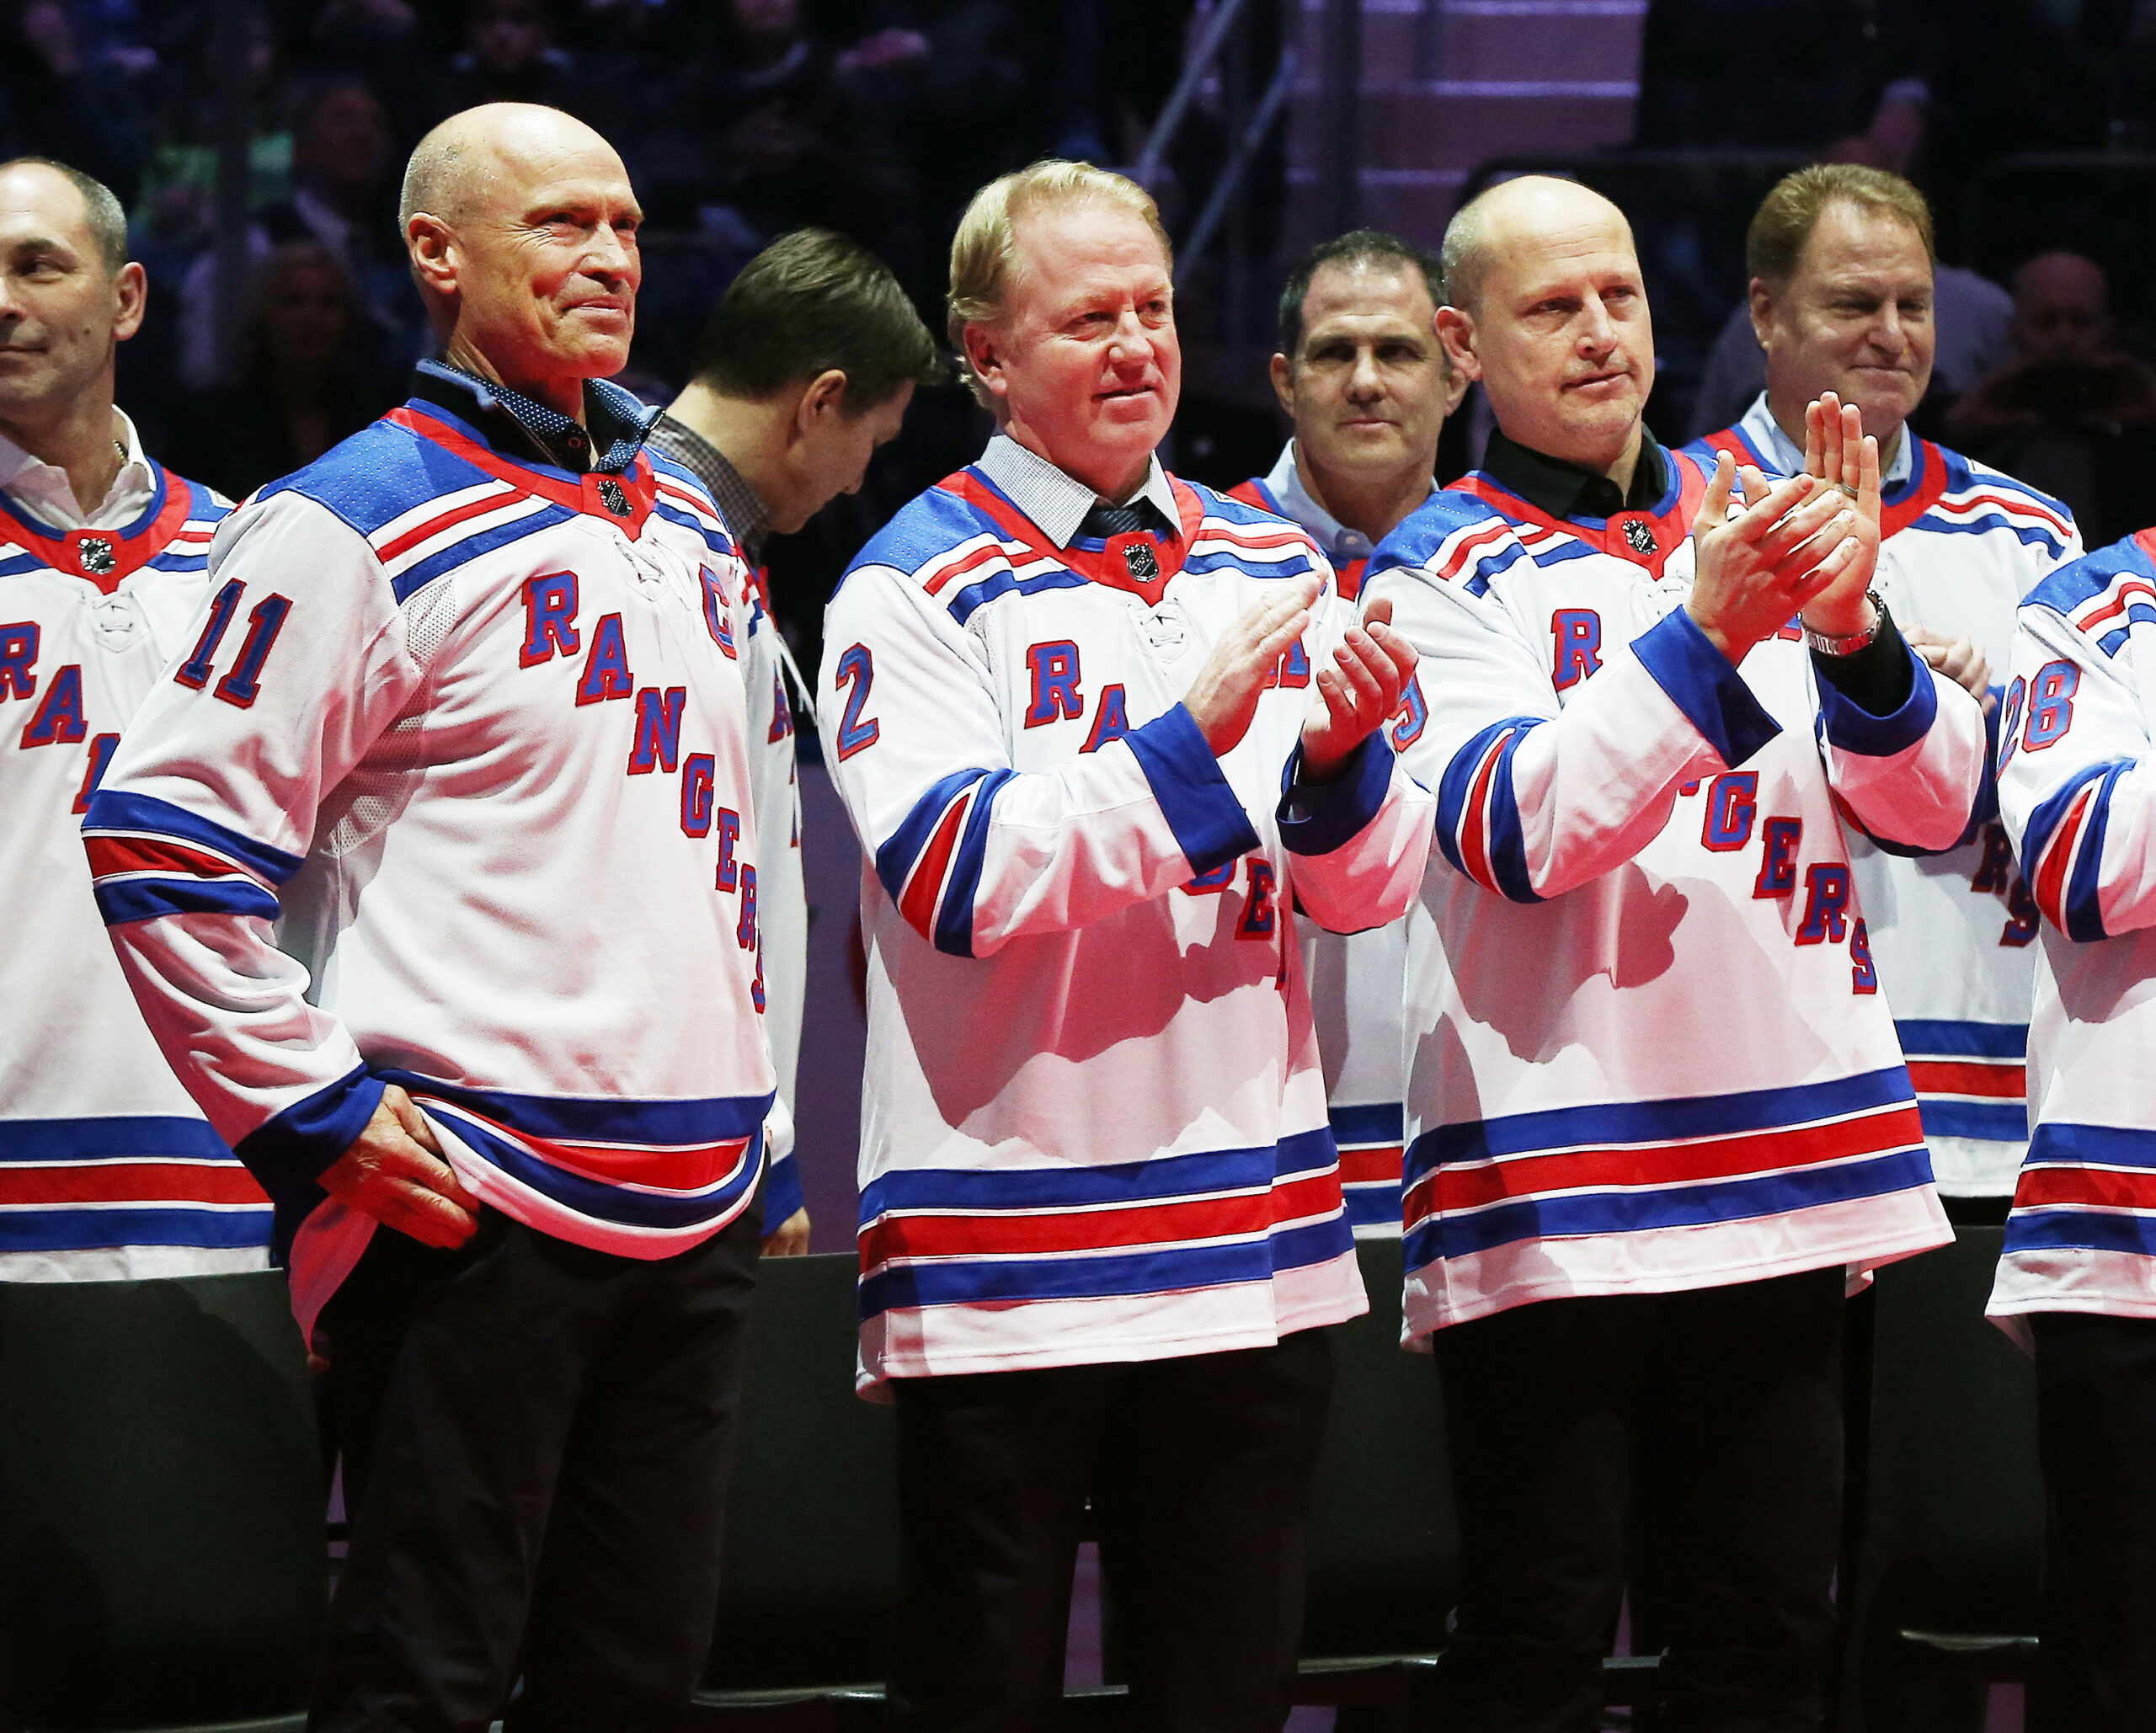 New York Rangers Puck - Center Ice – Hockey Hall of Fame